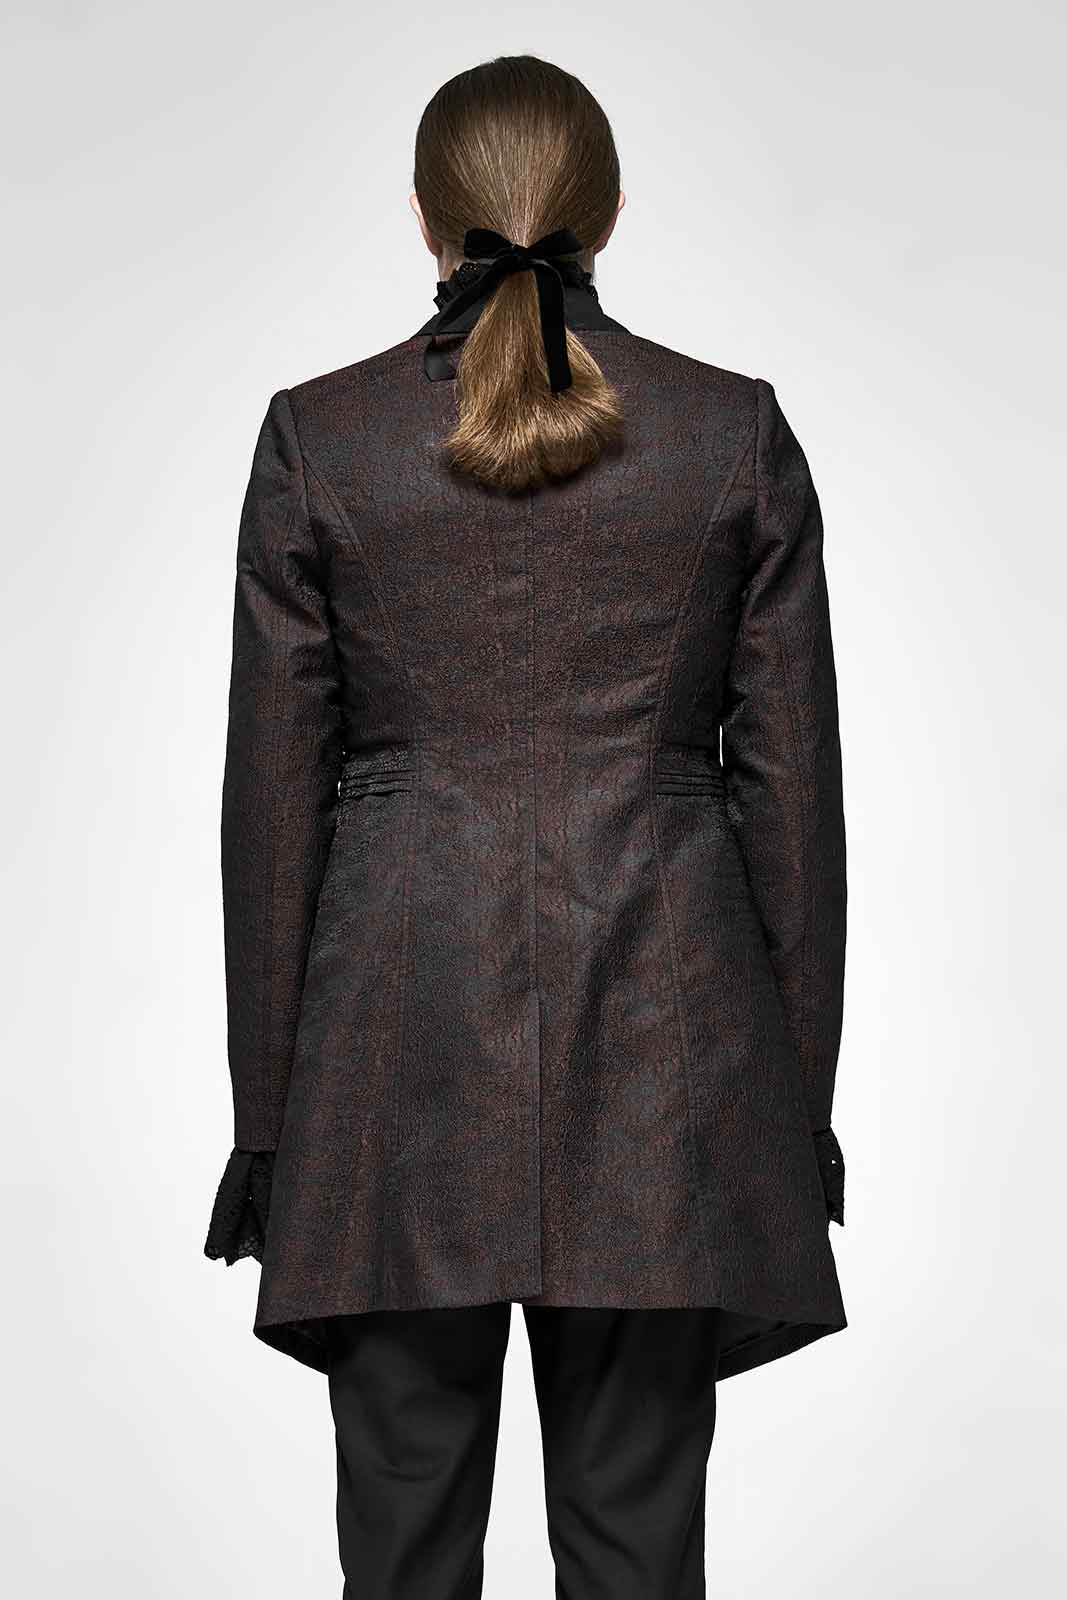 PUNK RAVE Gothic Straight Jacket  ANDERSARTIG - Gothic Fashion